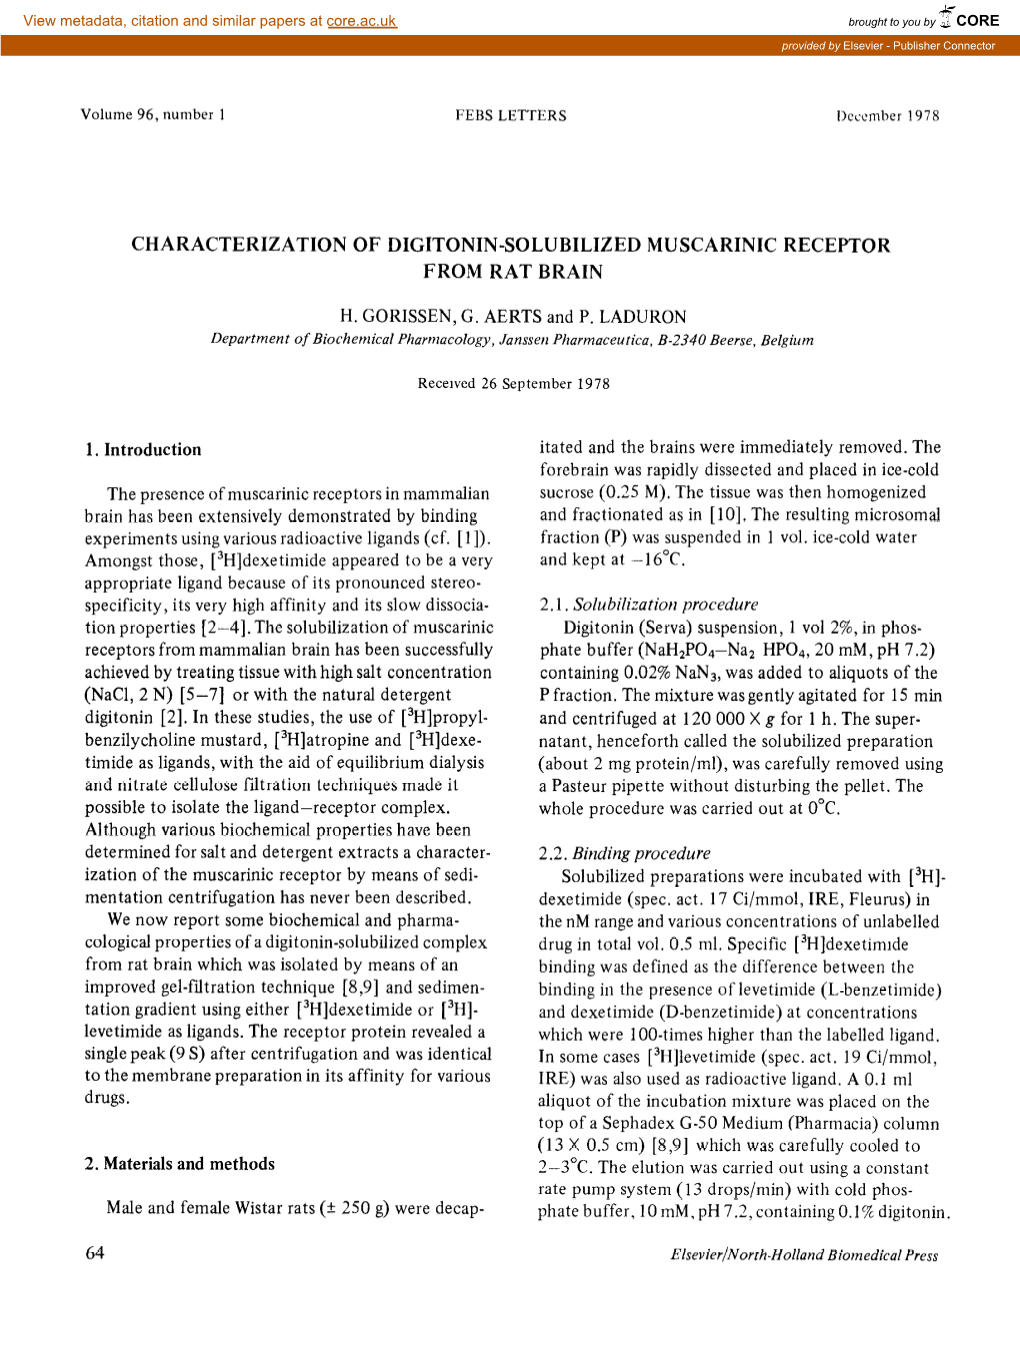 CHARACTERIZATION of DIGITONIN-SOLUBILIZED MUSCARINIC RECEPTOR from RAT BRAIN H. GORISSEN, G. AERTS and P. LADURON 1. Introductio